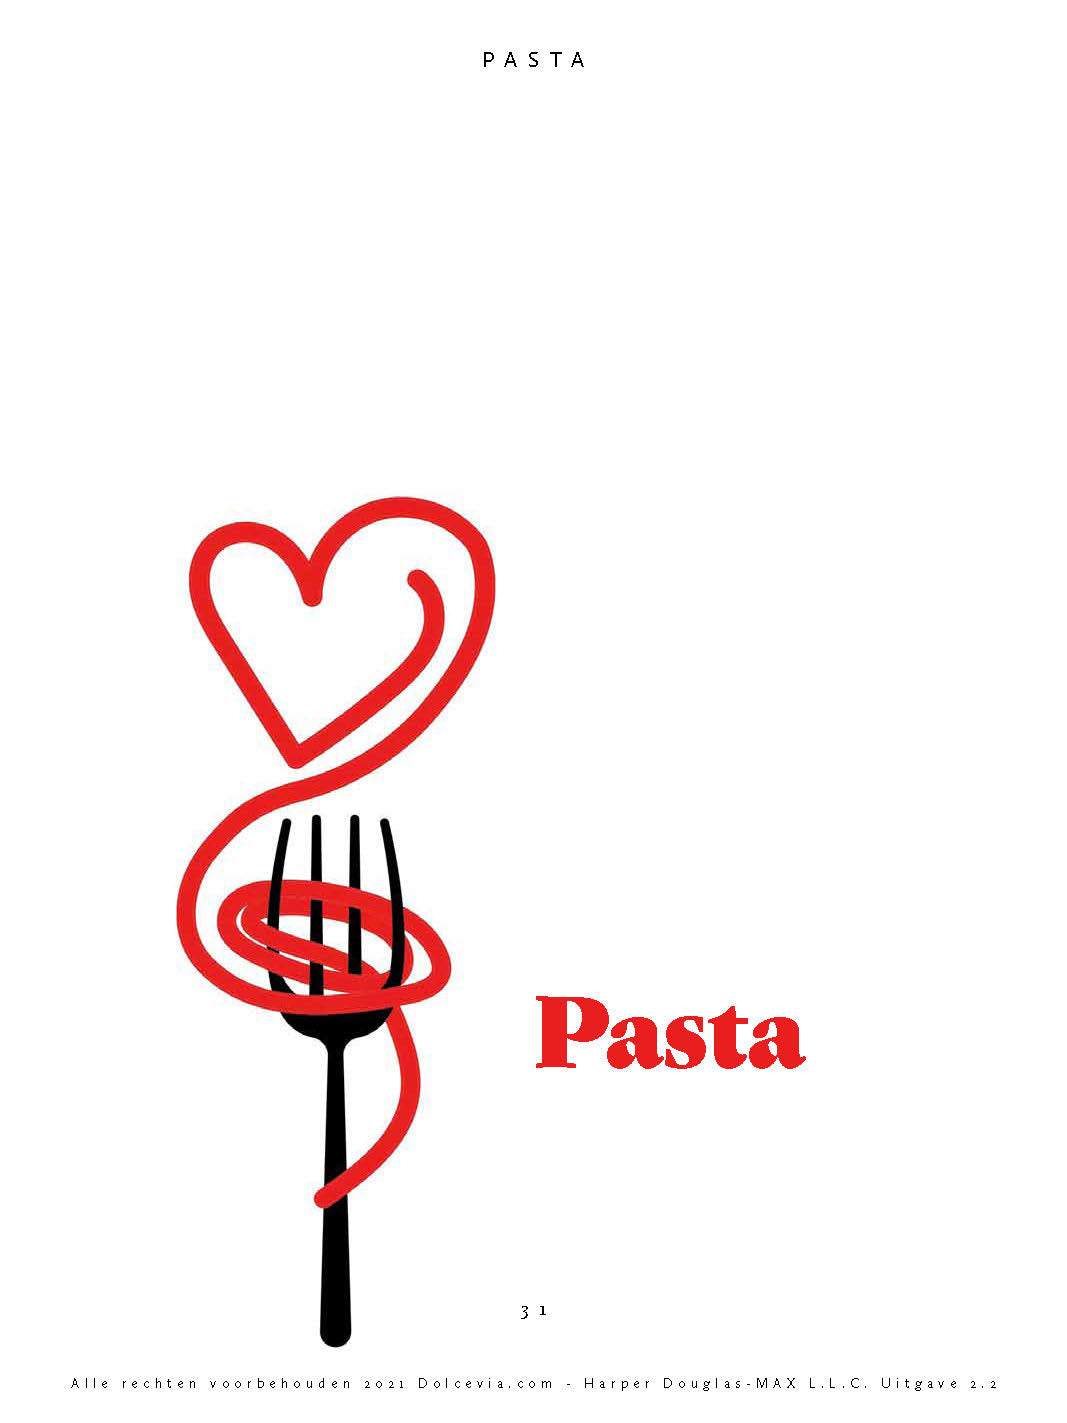 Pasta & Risotto kookboek van Dolcevia Uitgave 2.3